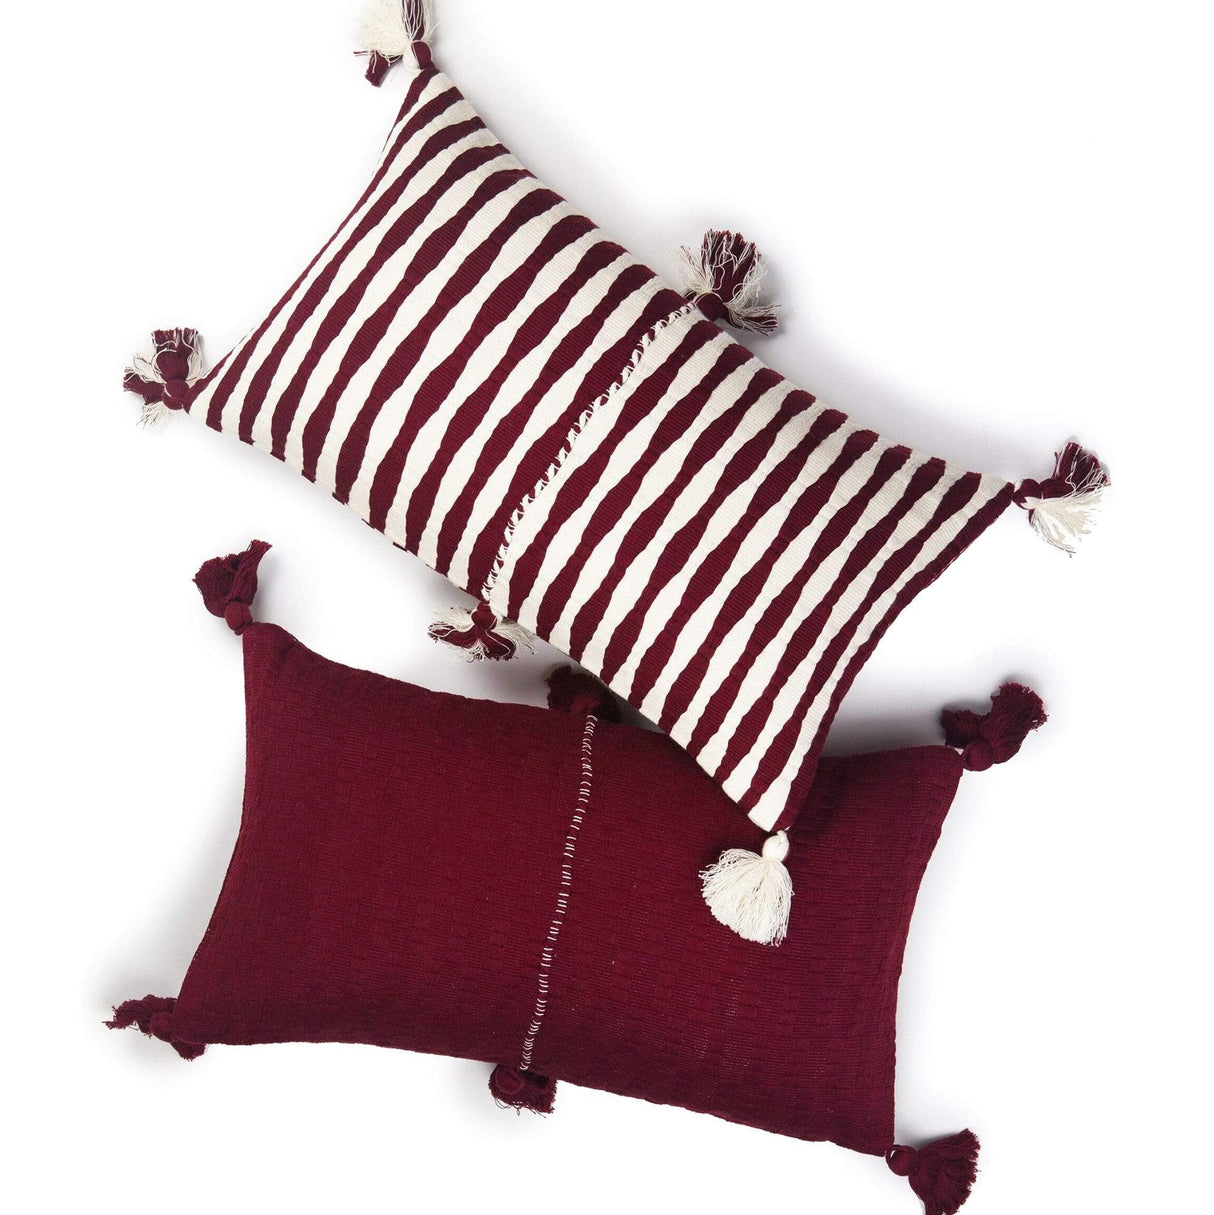 Archive New York Antigua Pillow - Burgundy Stripe Pillow & Decor archive-R1220011-burgundy-stripe